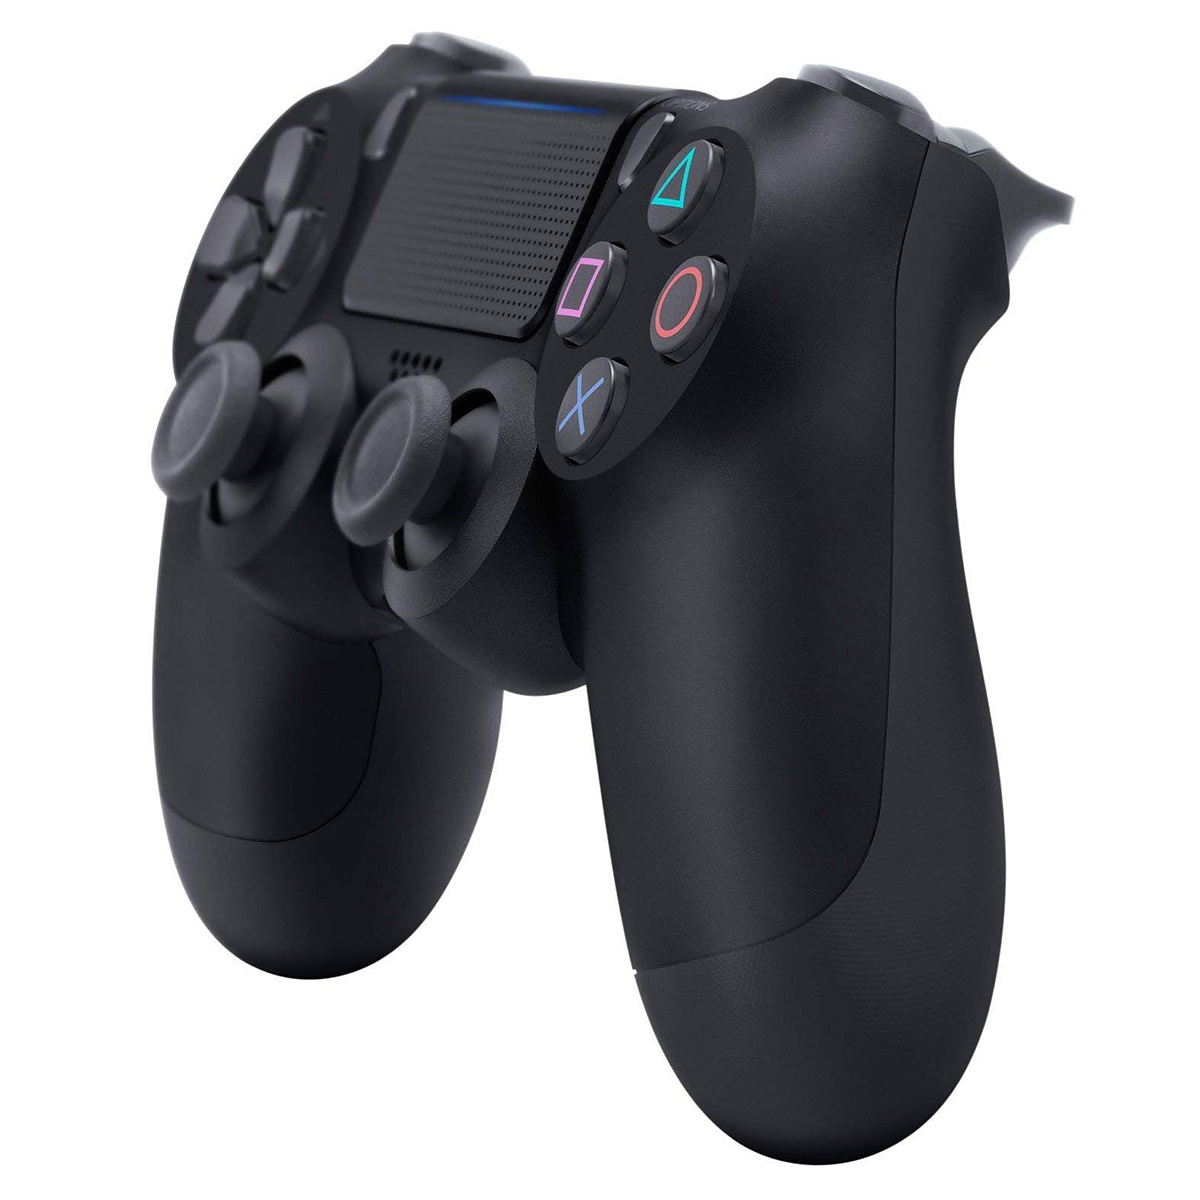 PS4 trådlös handkontroll, svart